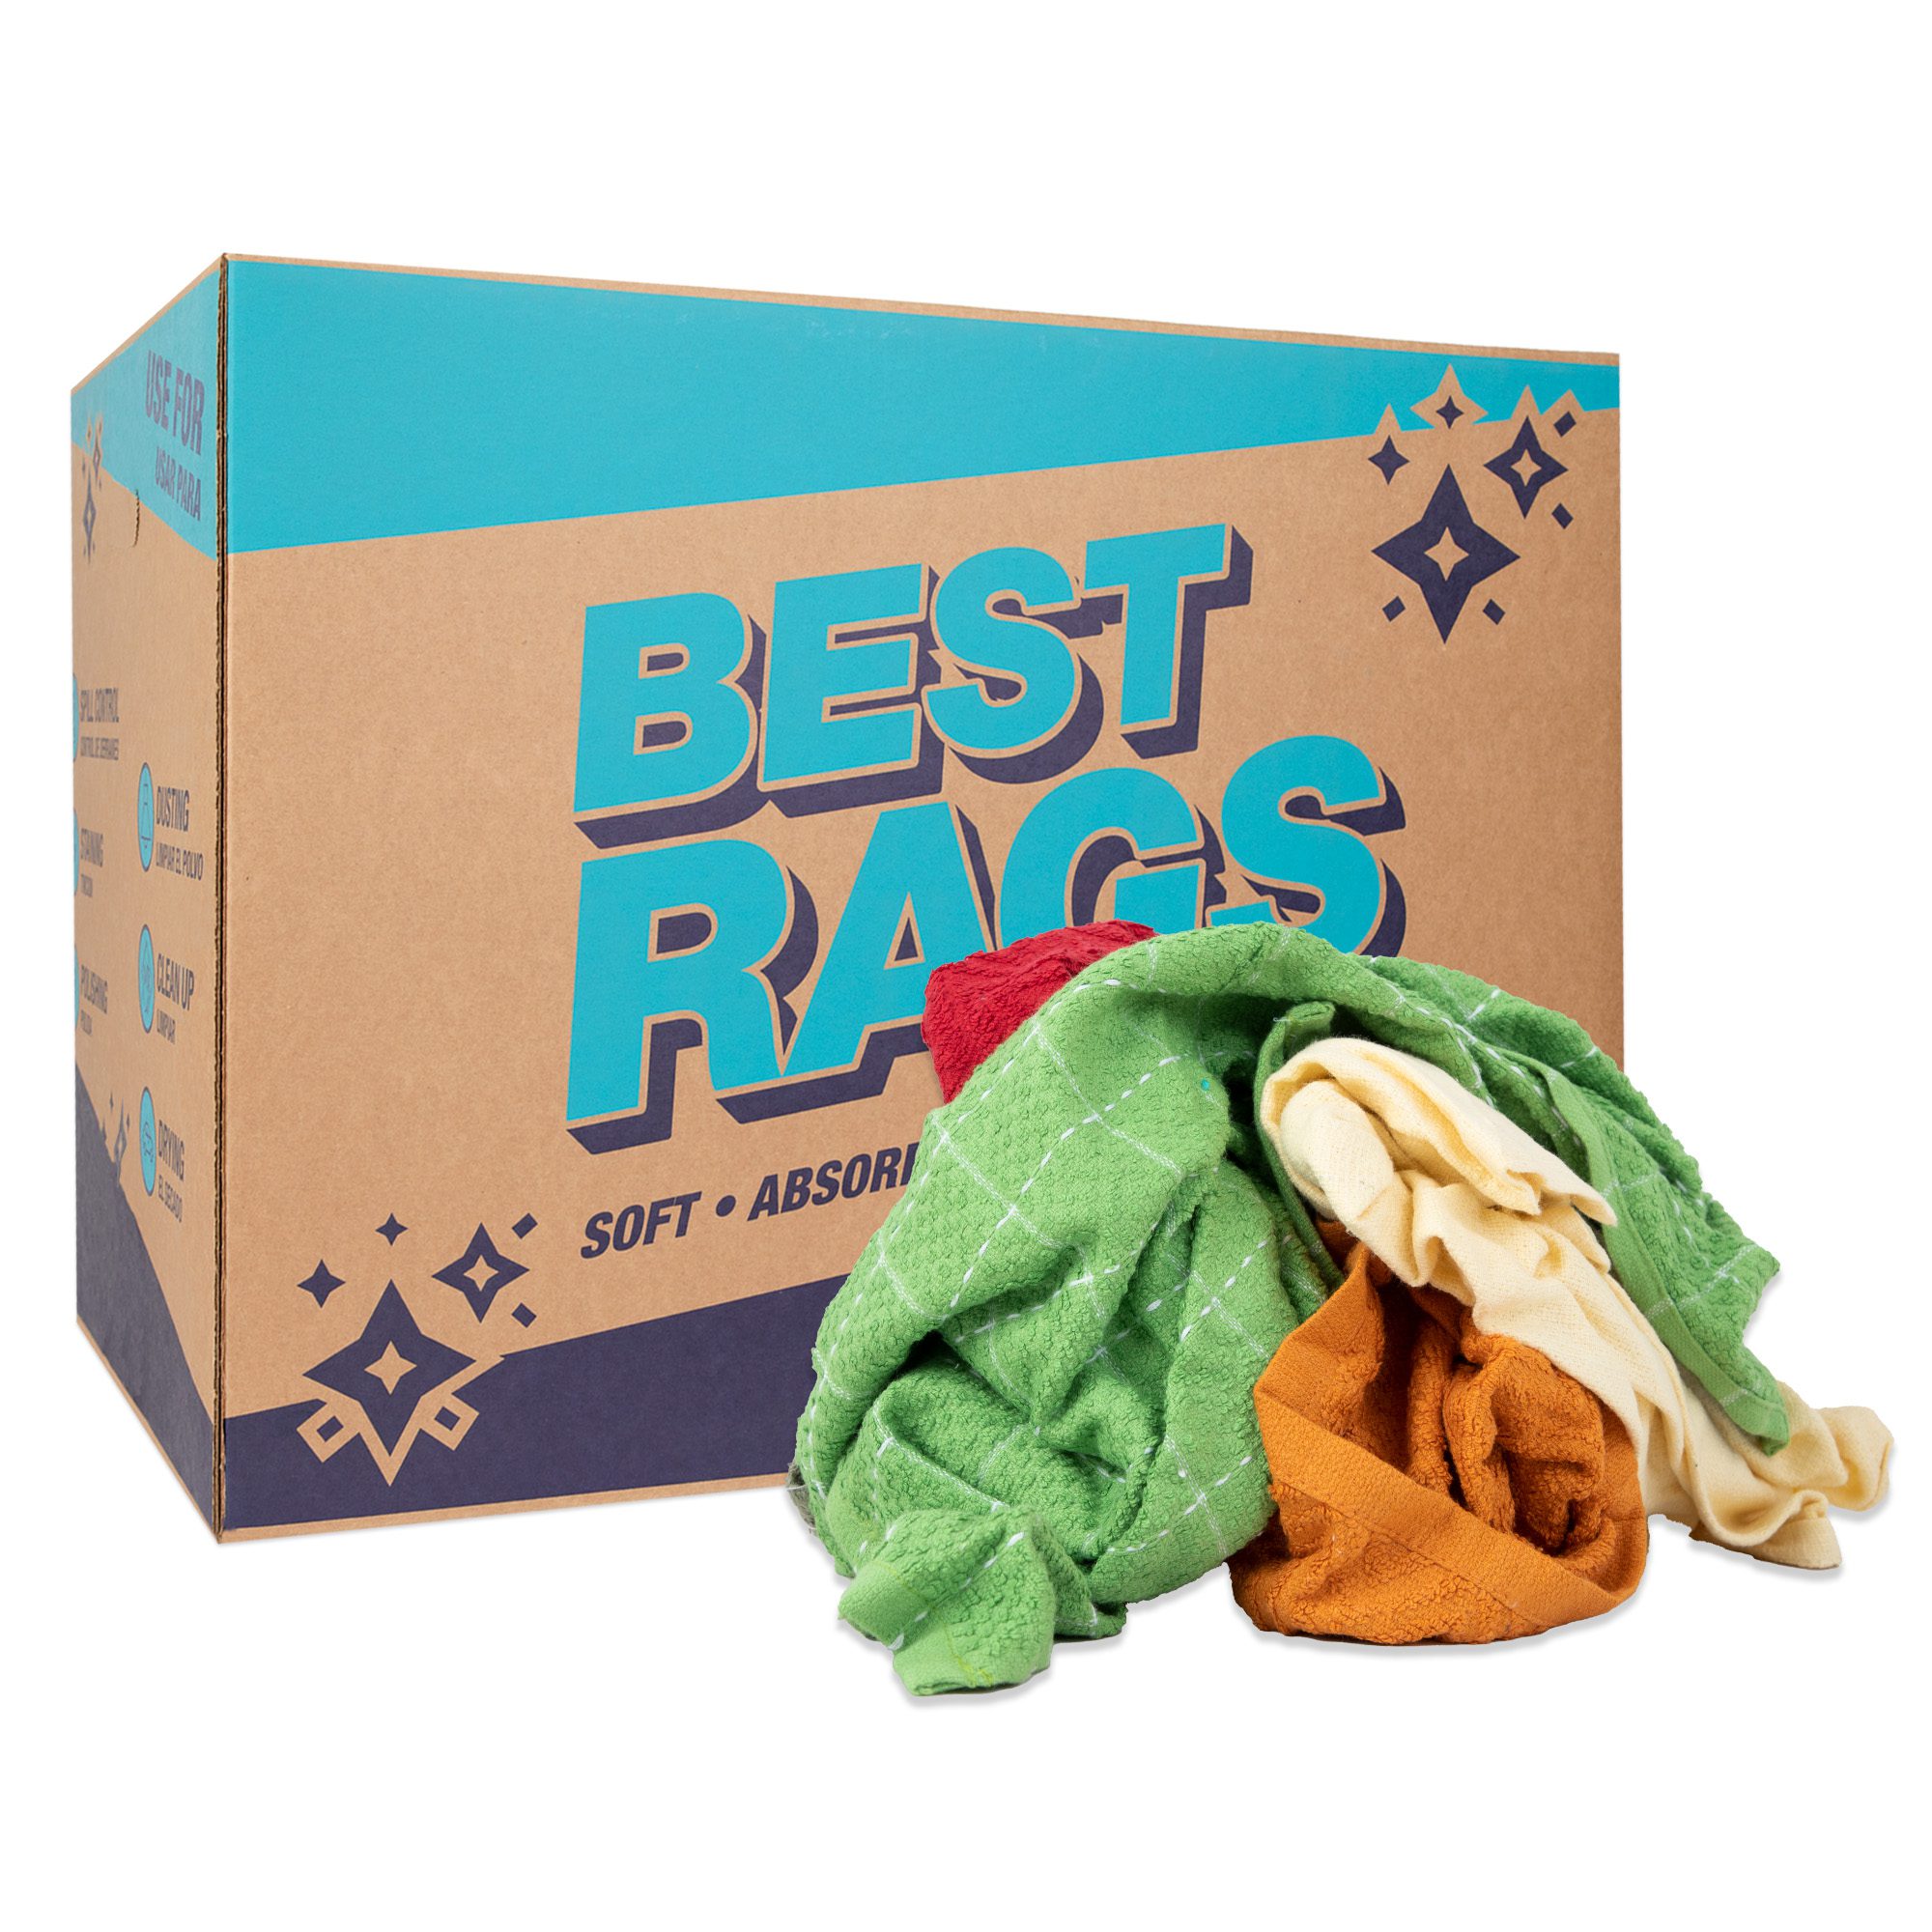 Bath Towel Rags (12 rags/box)